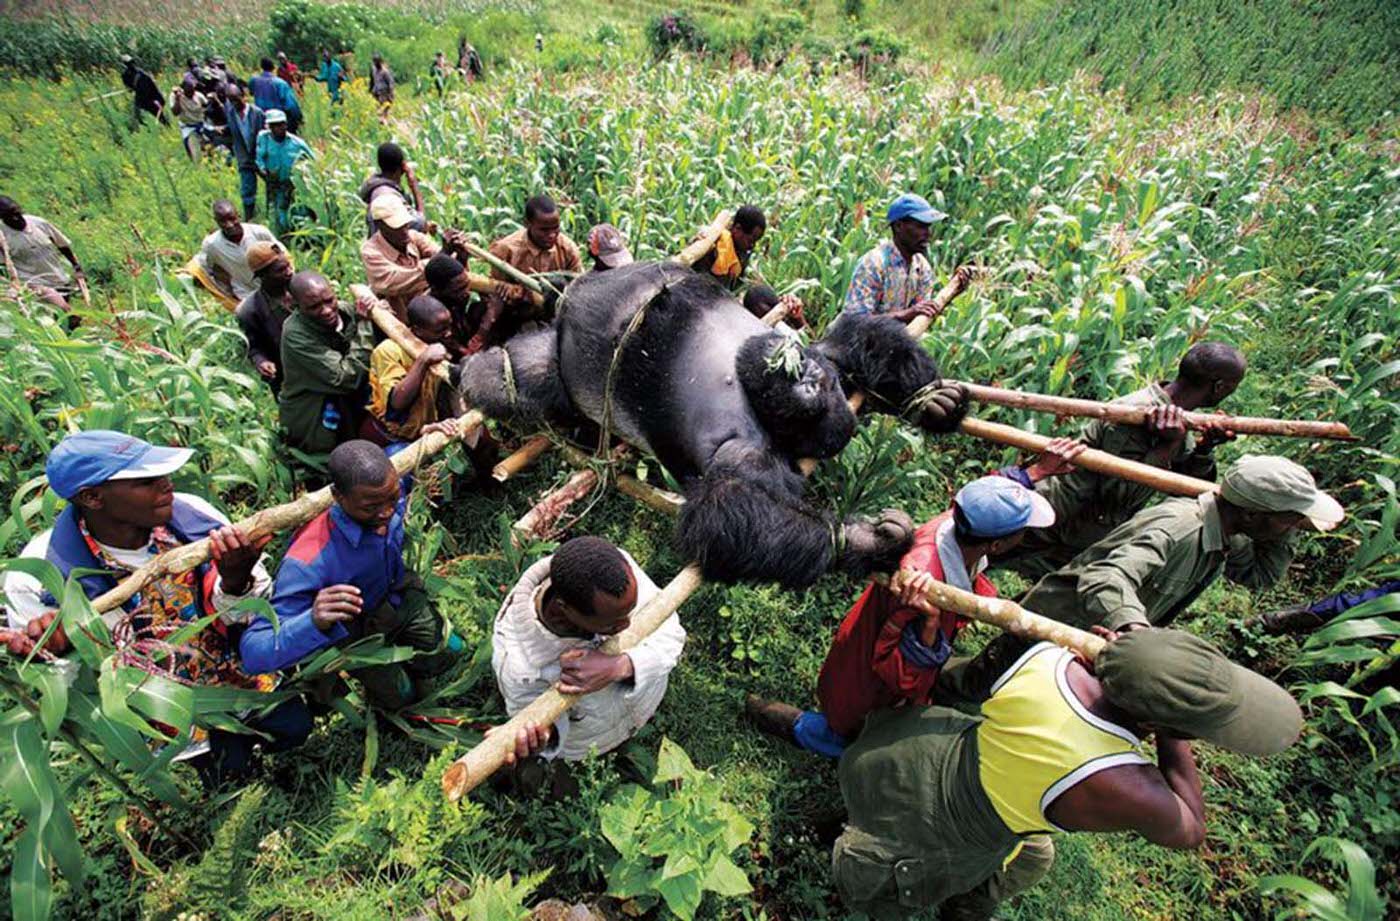 Gorilla In The Congo, 2007